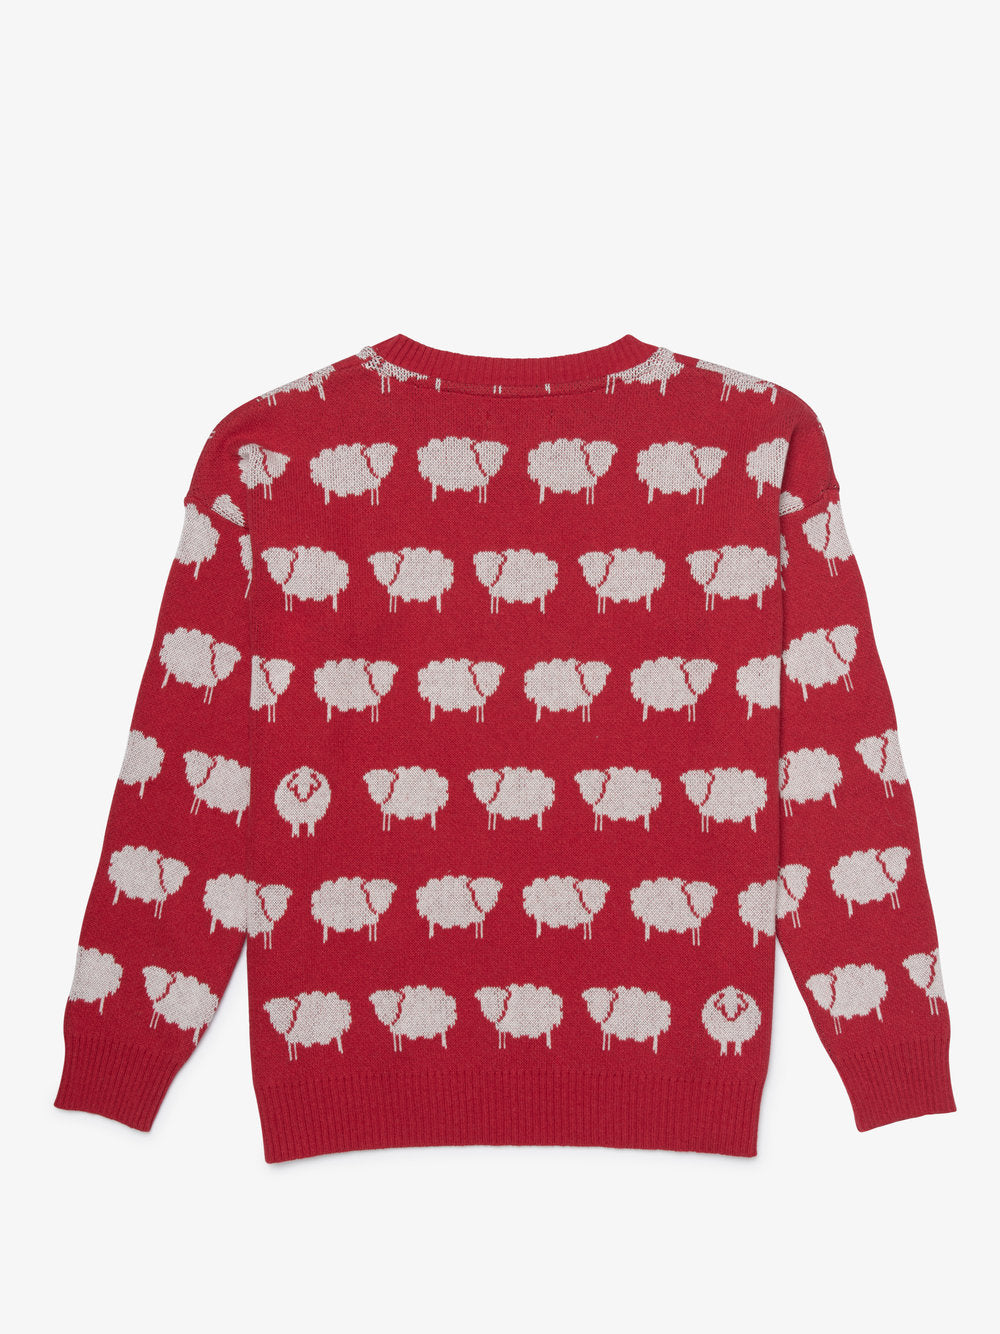 Milo & Dexter - SS24 - Princess Diana Sweater - The Holy Sheep Sweater  - display back 2